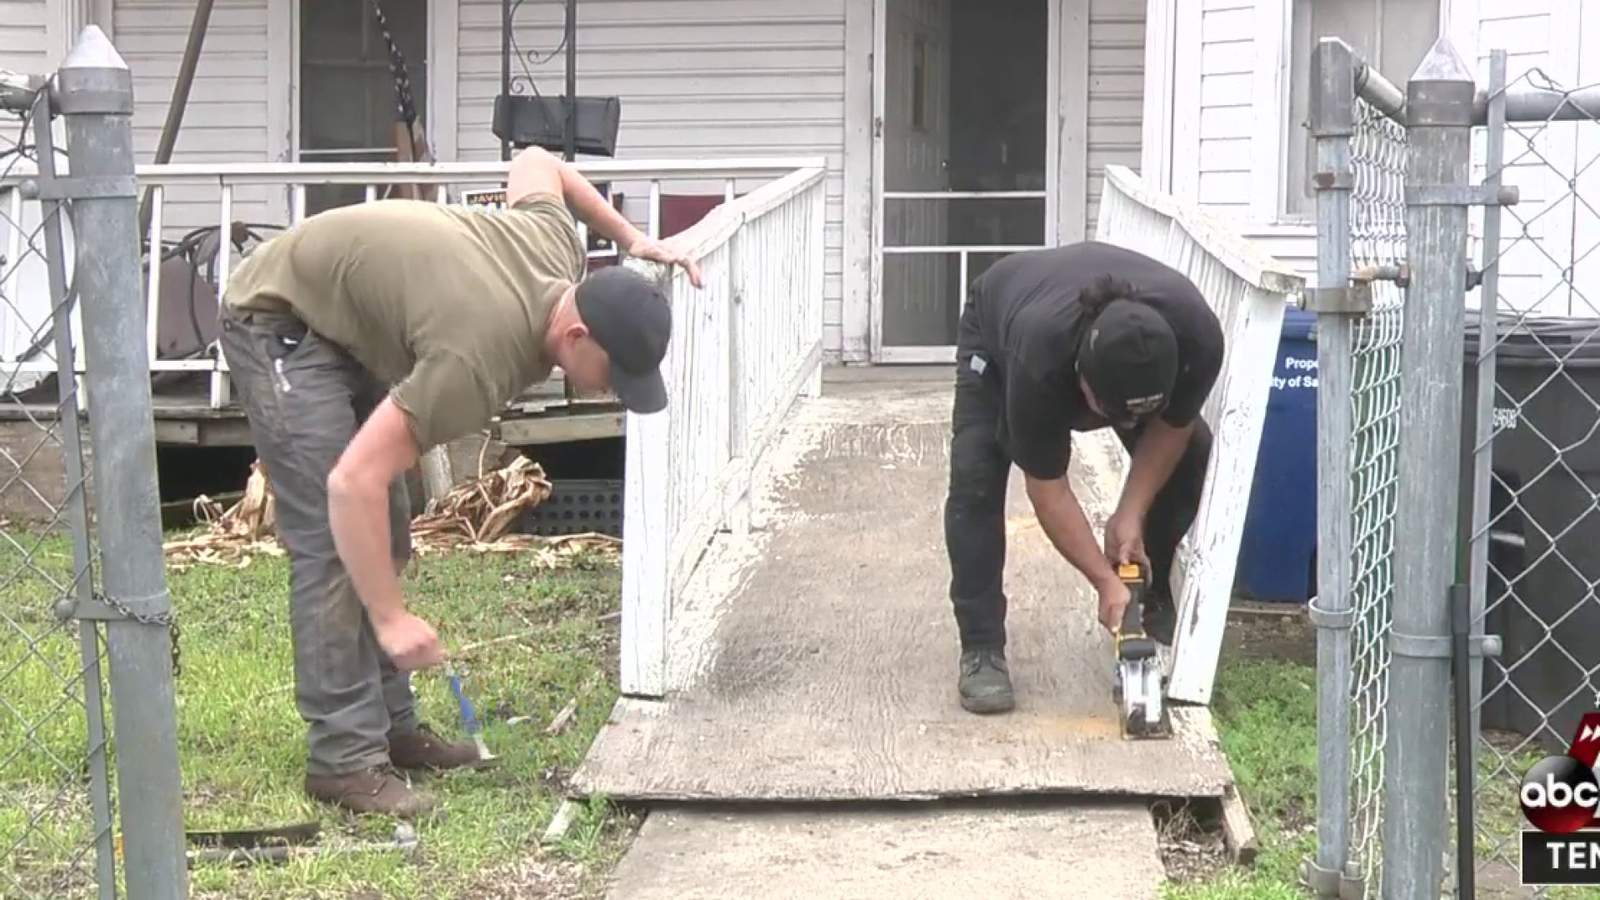 California-based plumbers bring aid to San Antonio